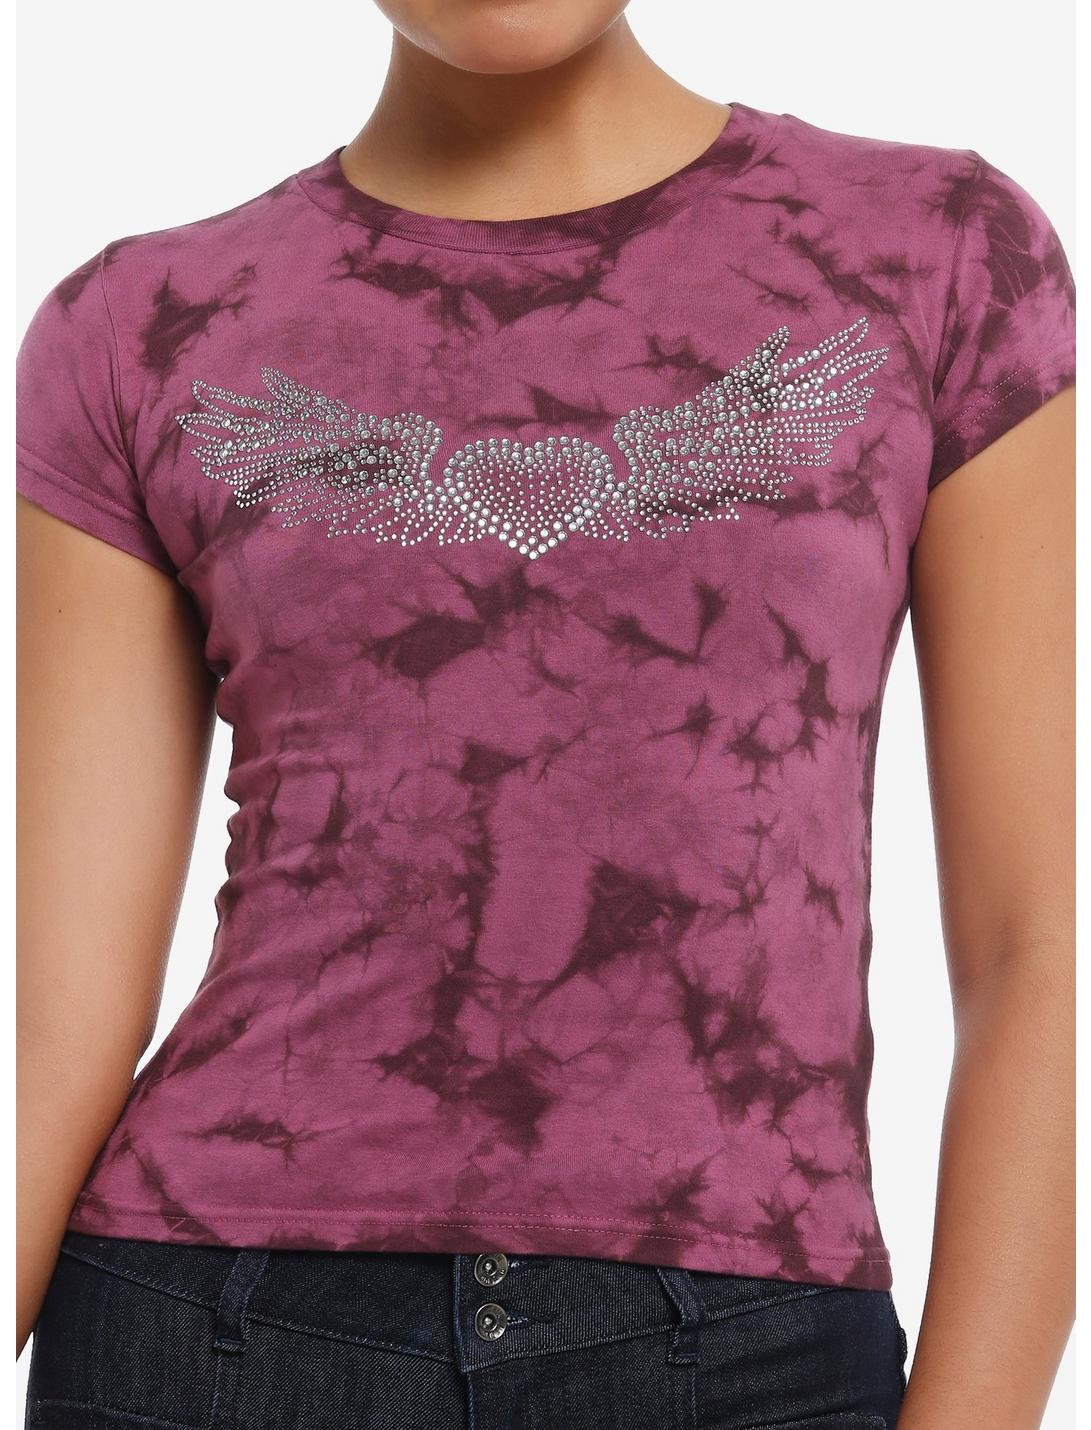 Winged Heart Rhinestone Pink Tie-Dye Girls Baby T-Shirt, PINK, hi-res